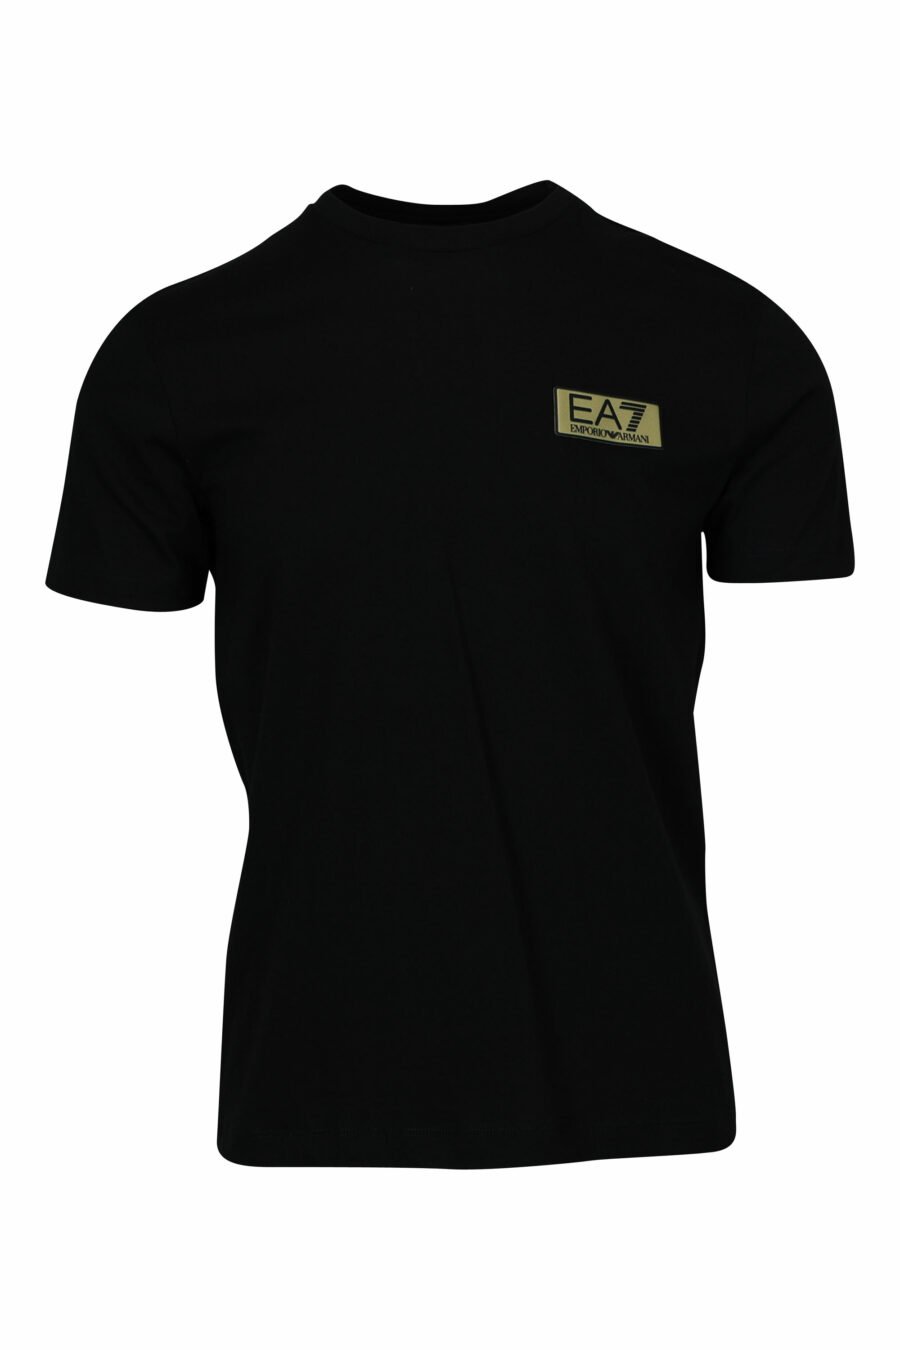 Camiseta negra con minilogo "lux identity" negro en placa dorada - 8058947471980